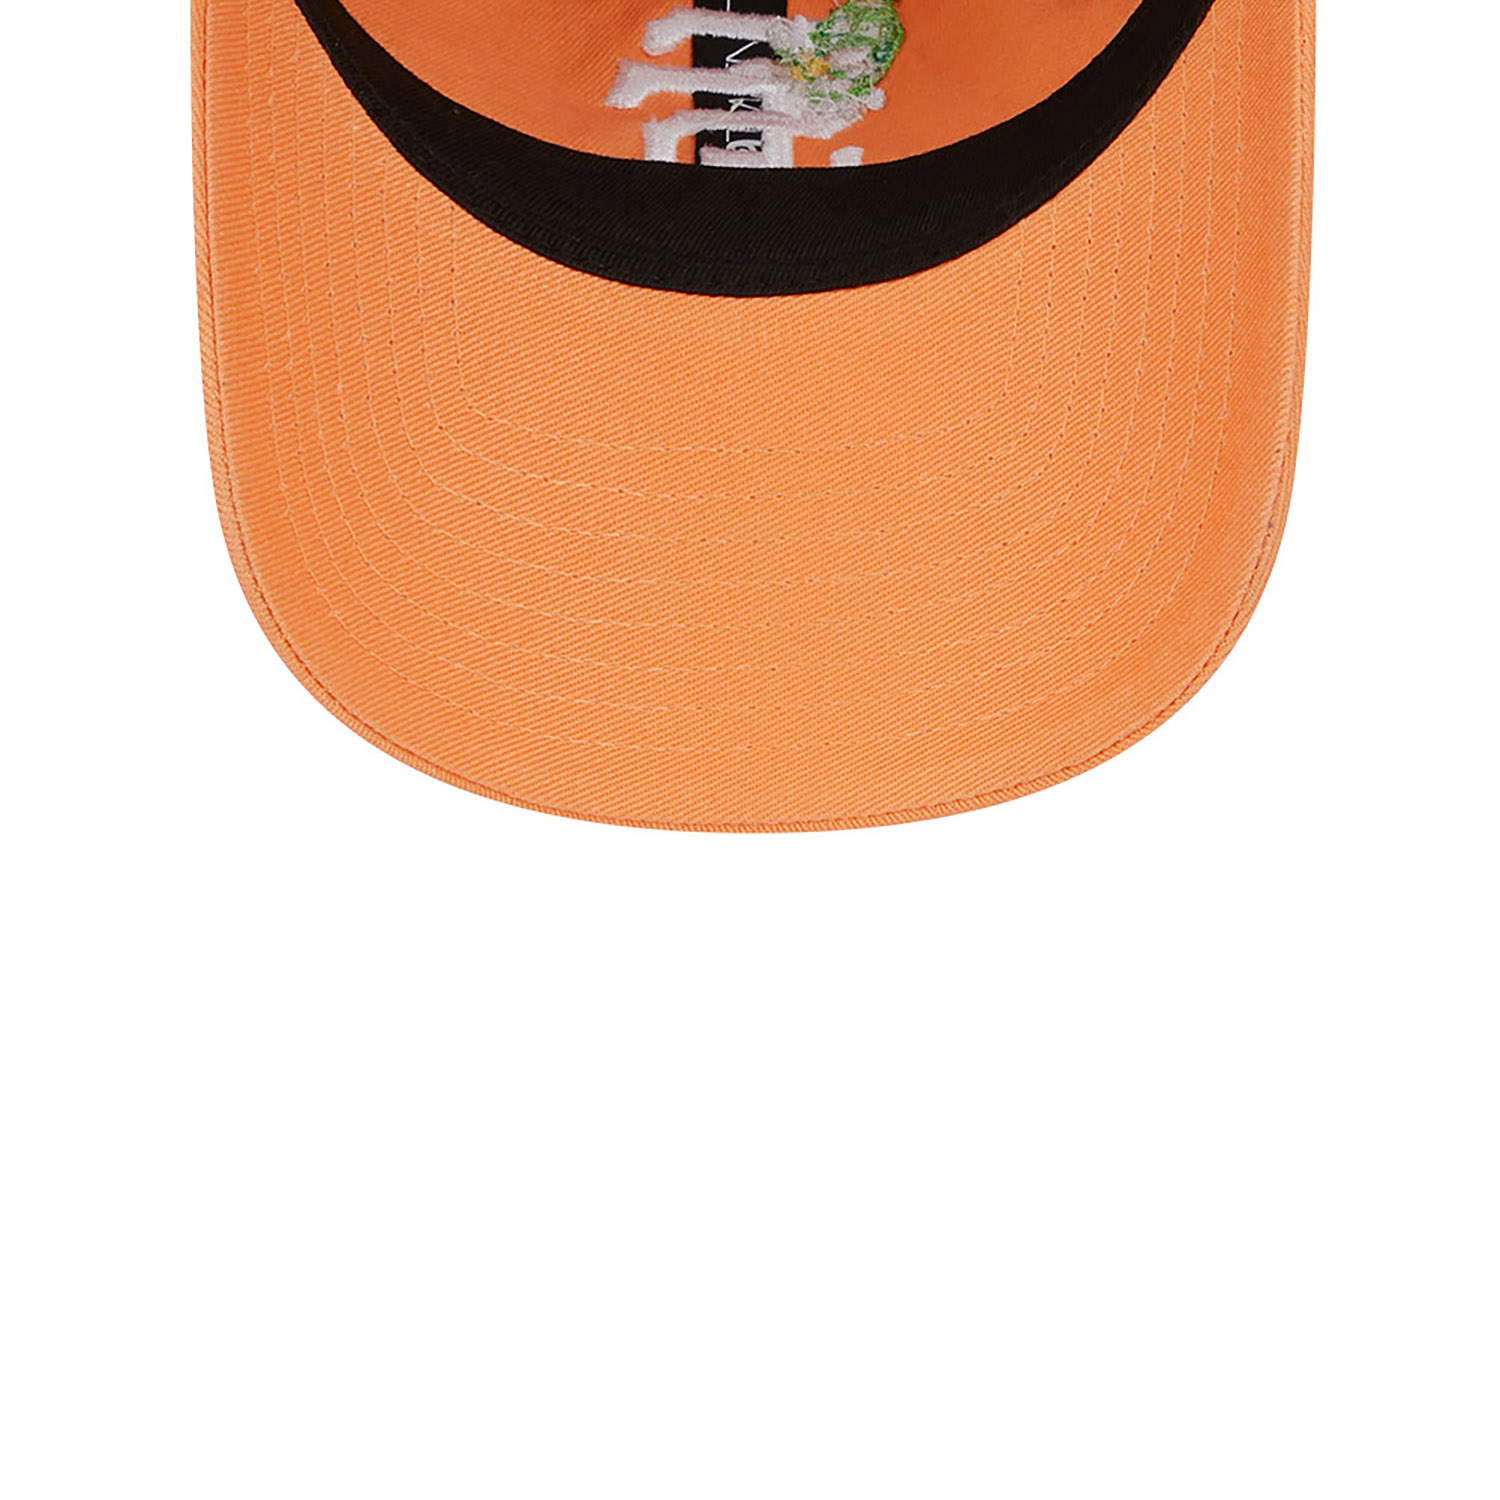 San Francisco Giants Womens Blossom Orange 9TWENTY Adjustable Cap